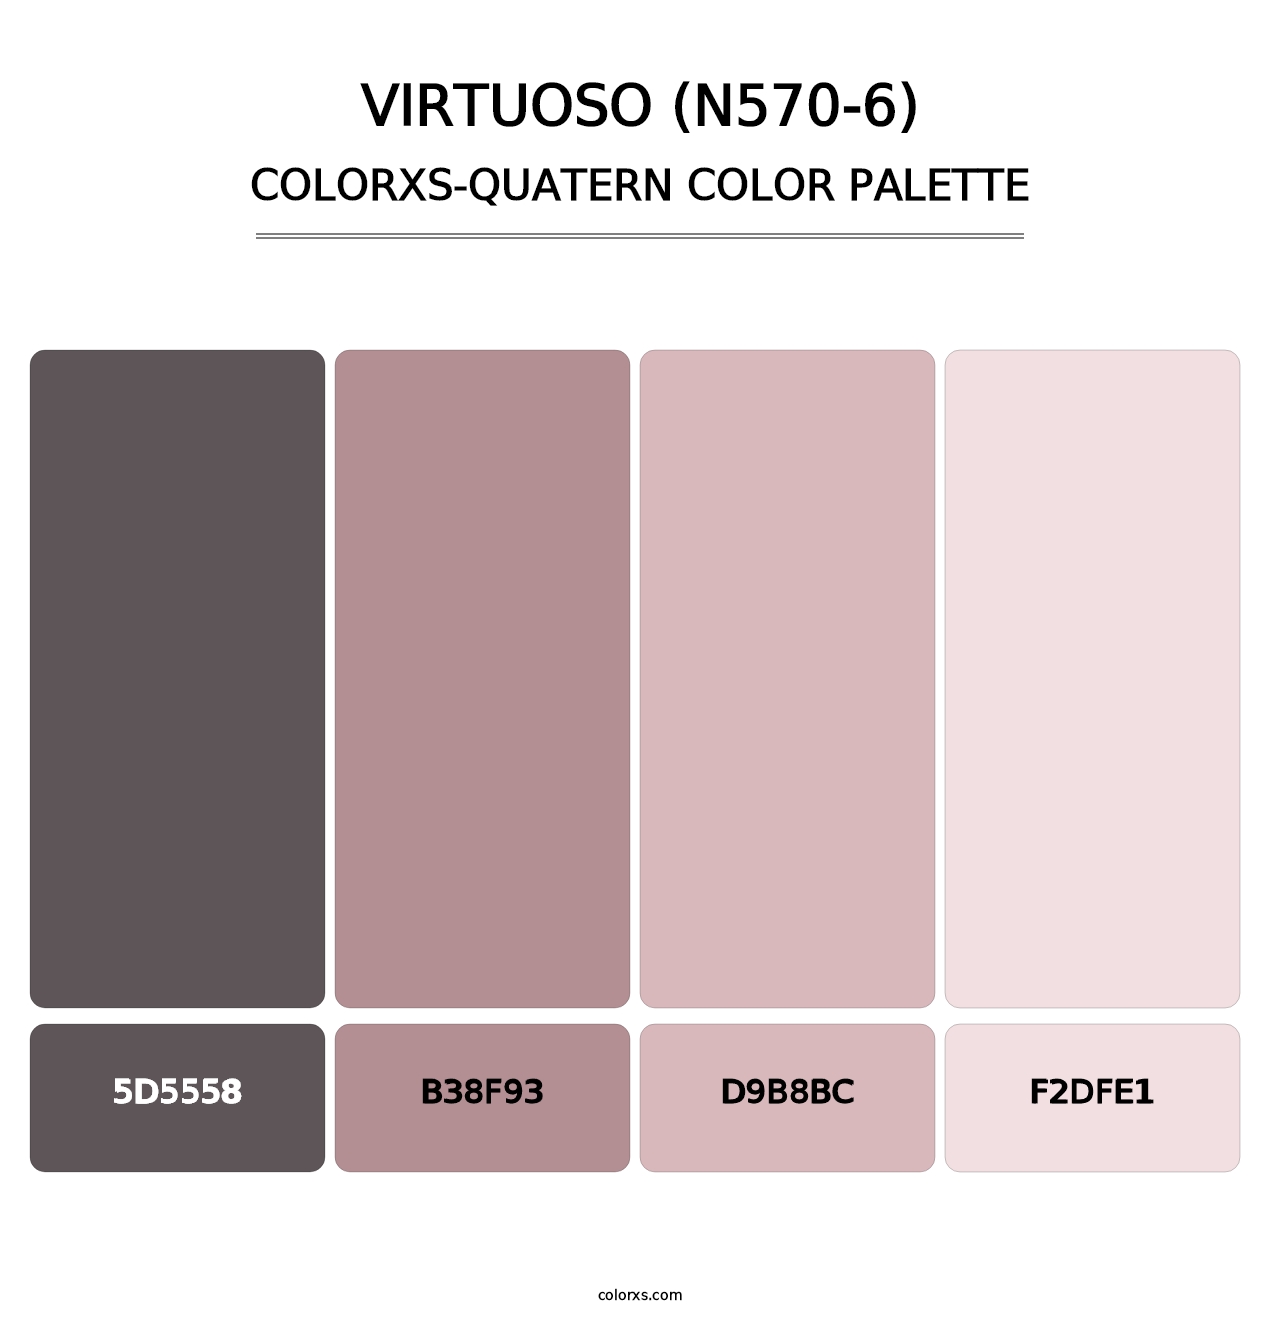 Virtuoso (N570-6) - Colorxs Quatern Palette